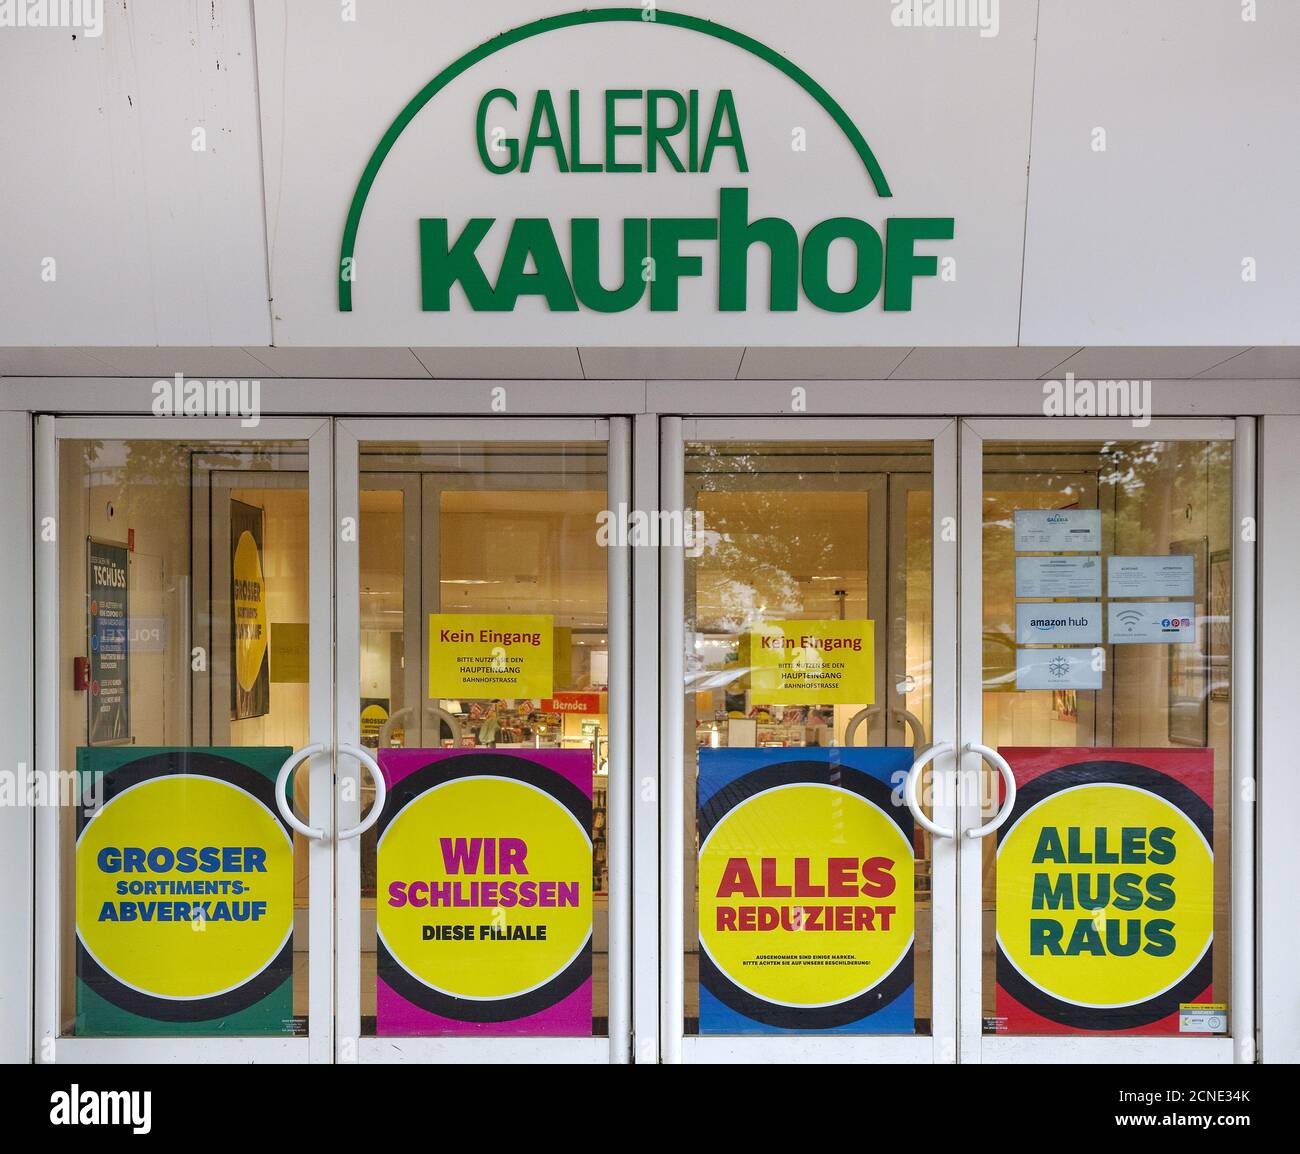 Entrance to Galeria Kaufhof, business closure, insolvency Galeria Karstadt  Kaufhof, Witten, Germany Stock Photo - Alamy